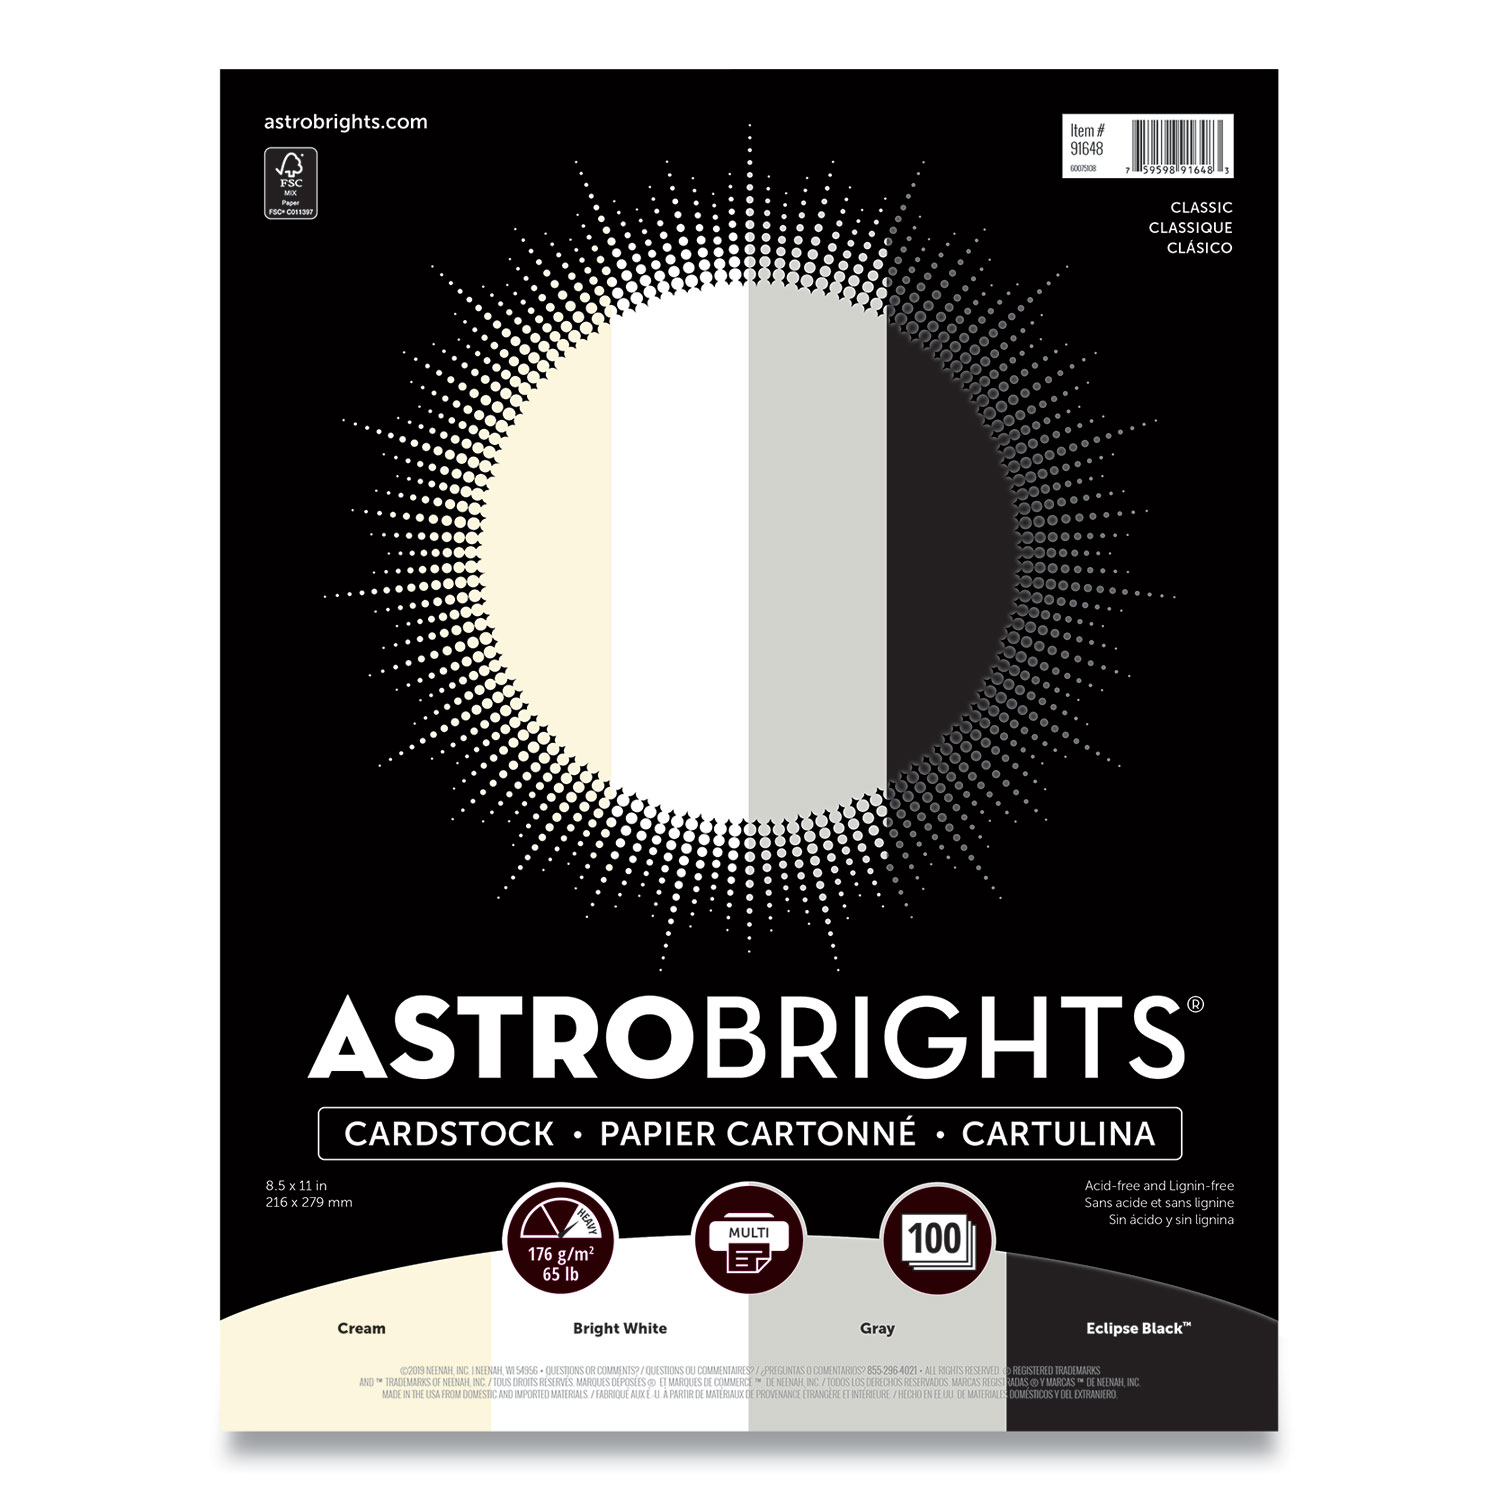  Astrobrights 91648 Color Cardstock - Classic Assortment, 65 lb, 8.5 x 11, Assorted Classic Colors, 100/Pack (WAU24396493) 